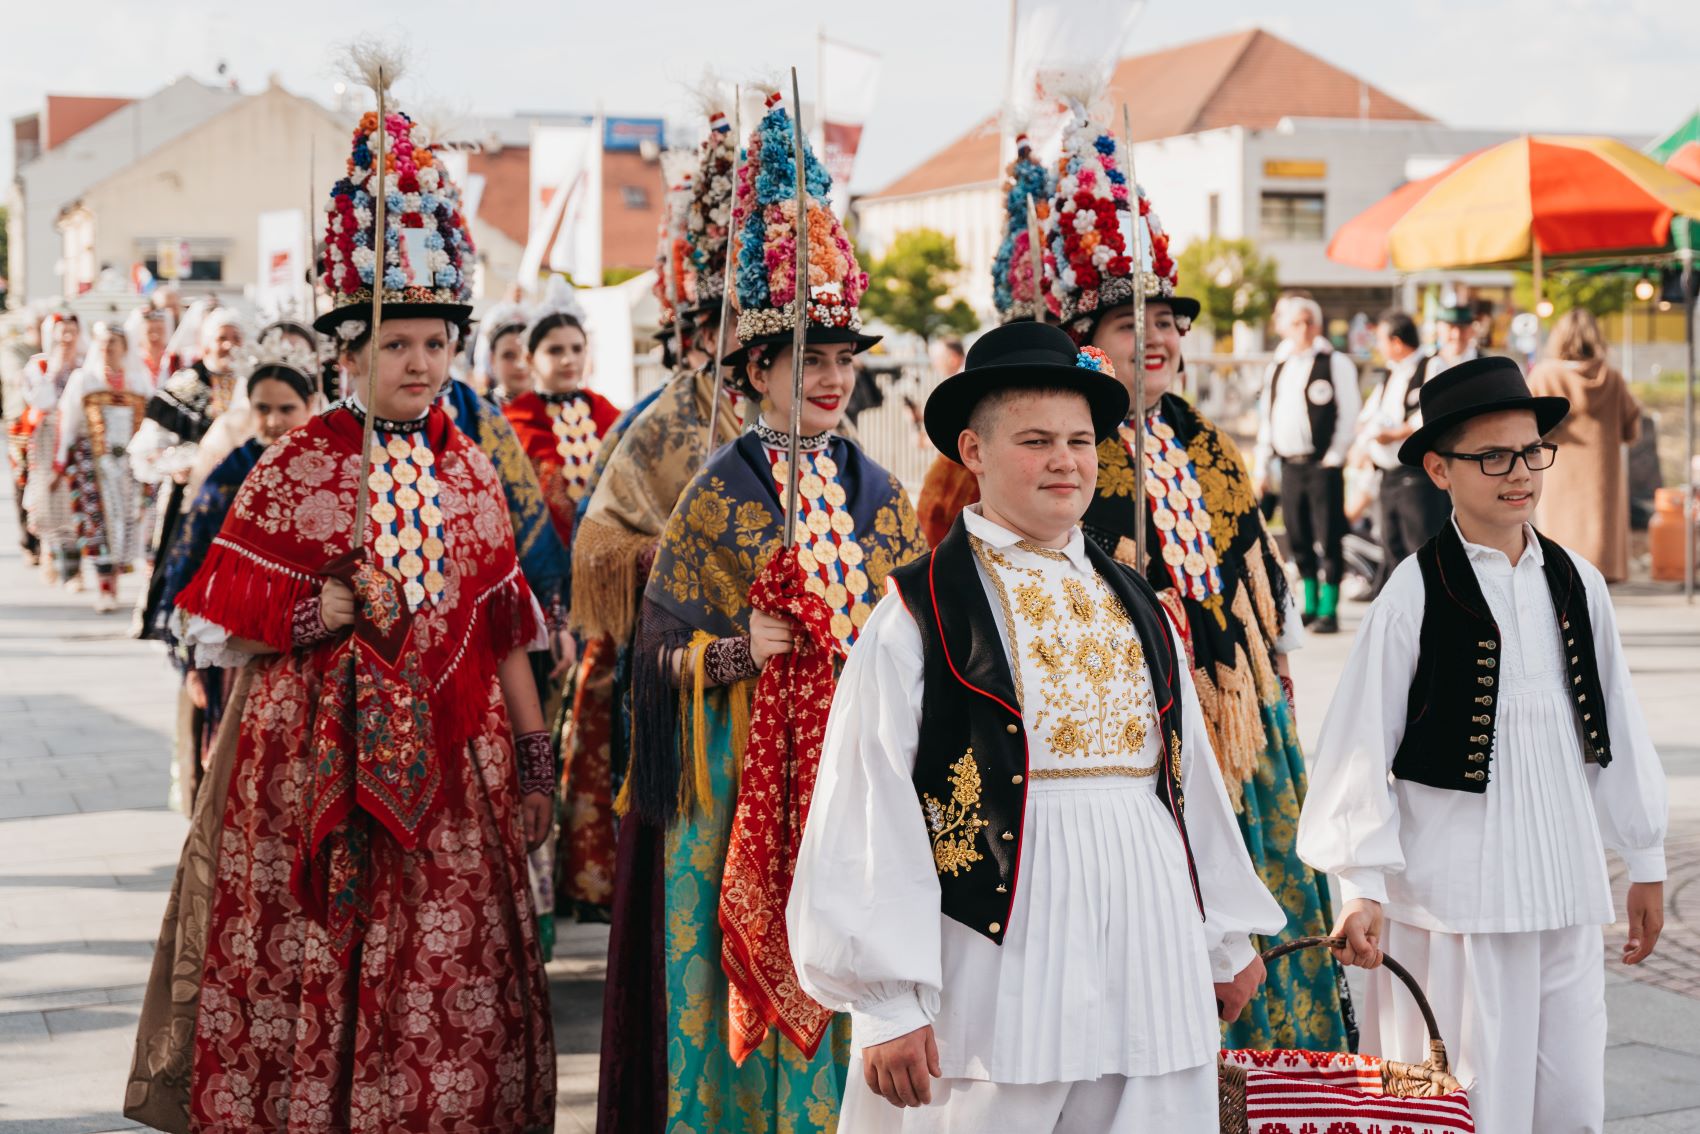 Festival celebrating best of Croatia opens